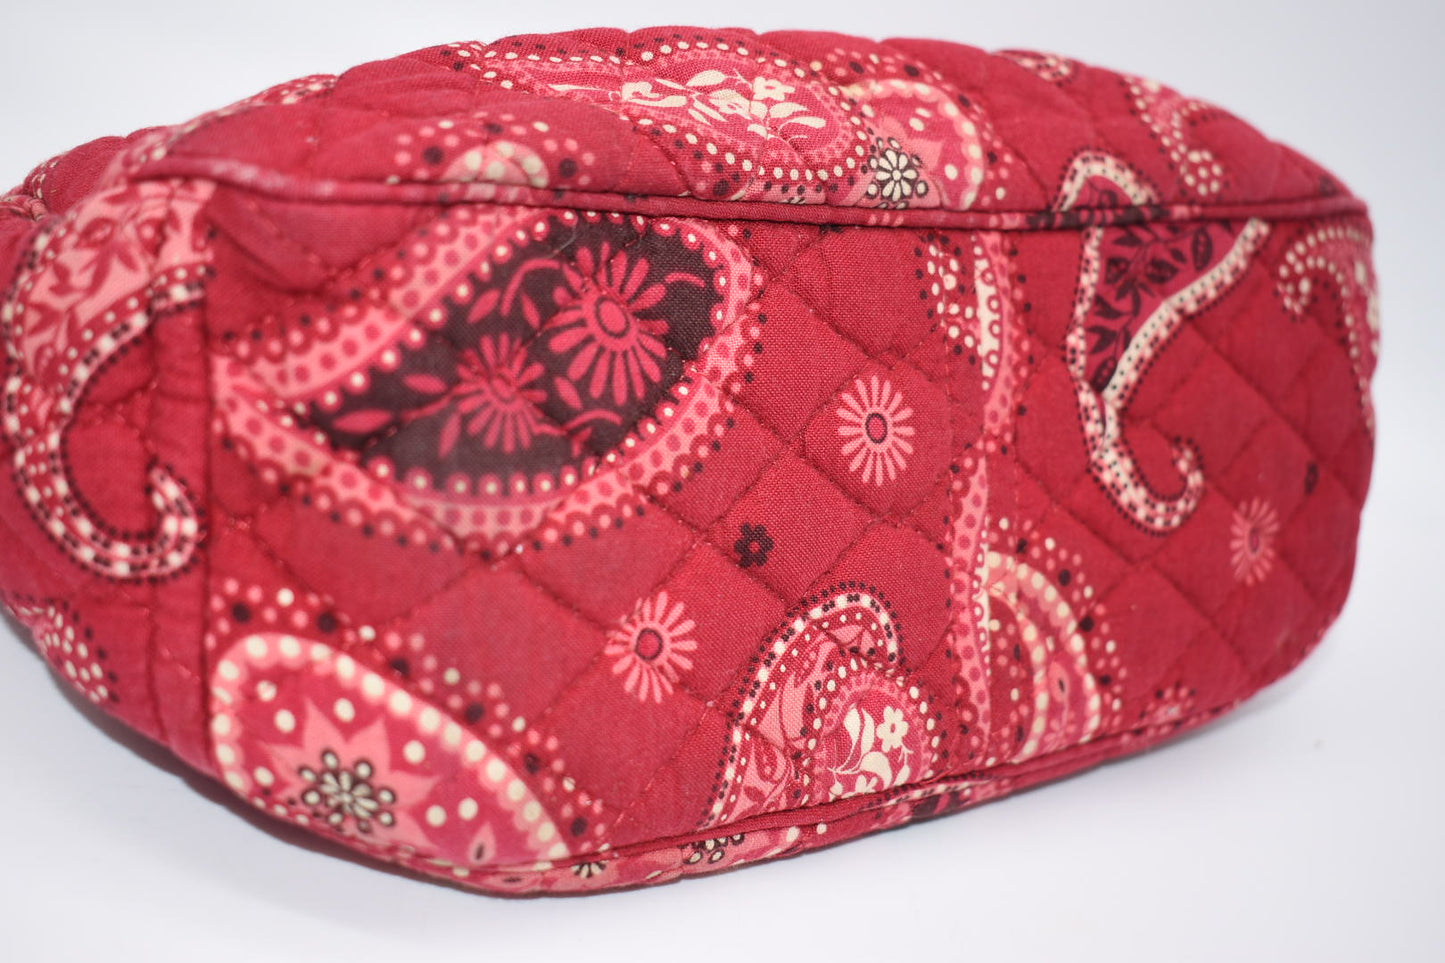 Vera Bradley Maggie Shoulder Bag in "Mesa Red" Pattern